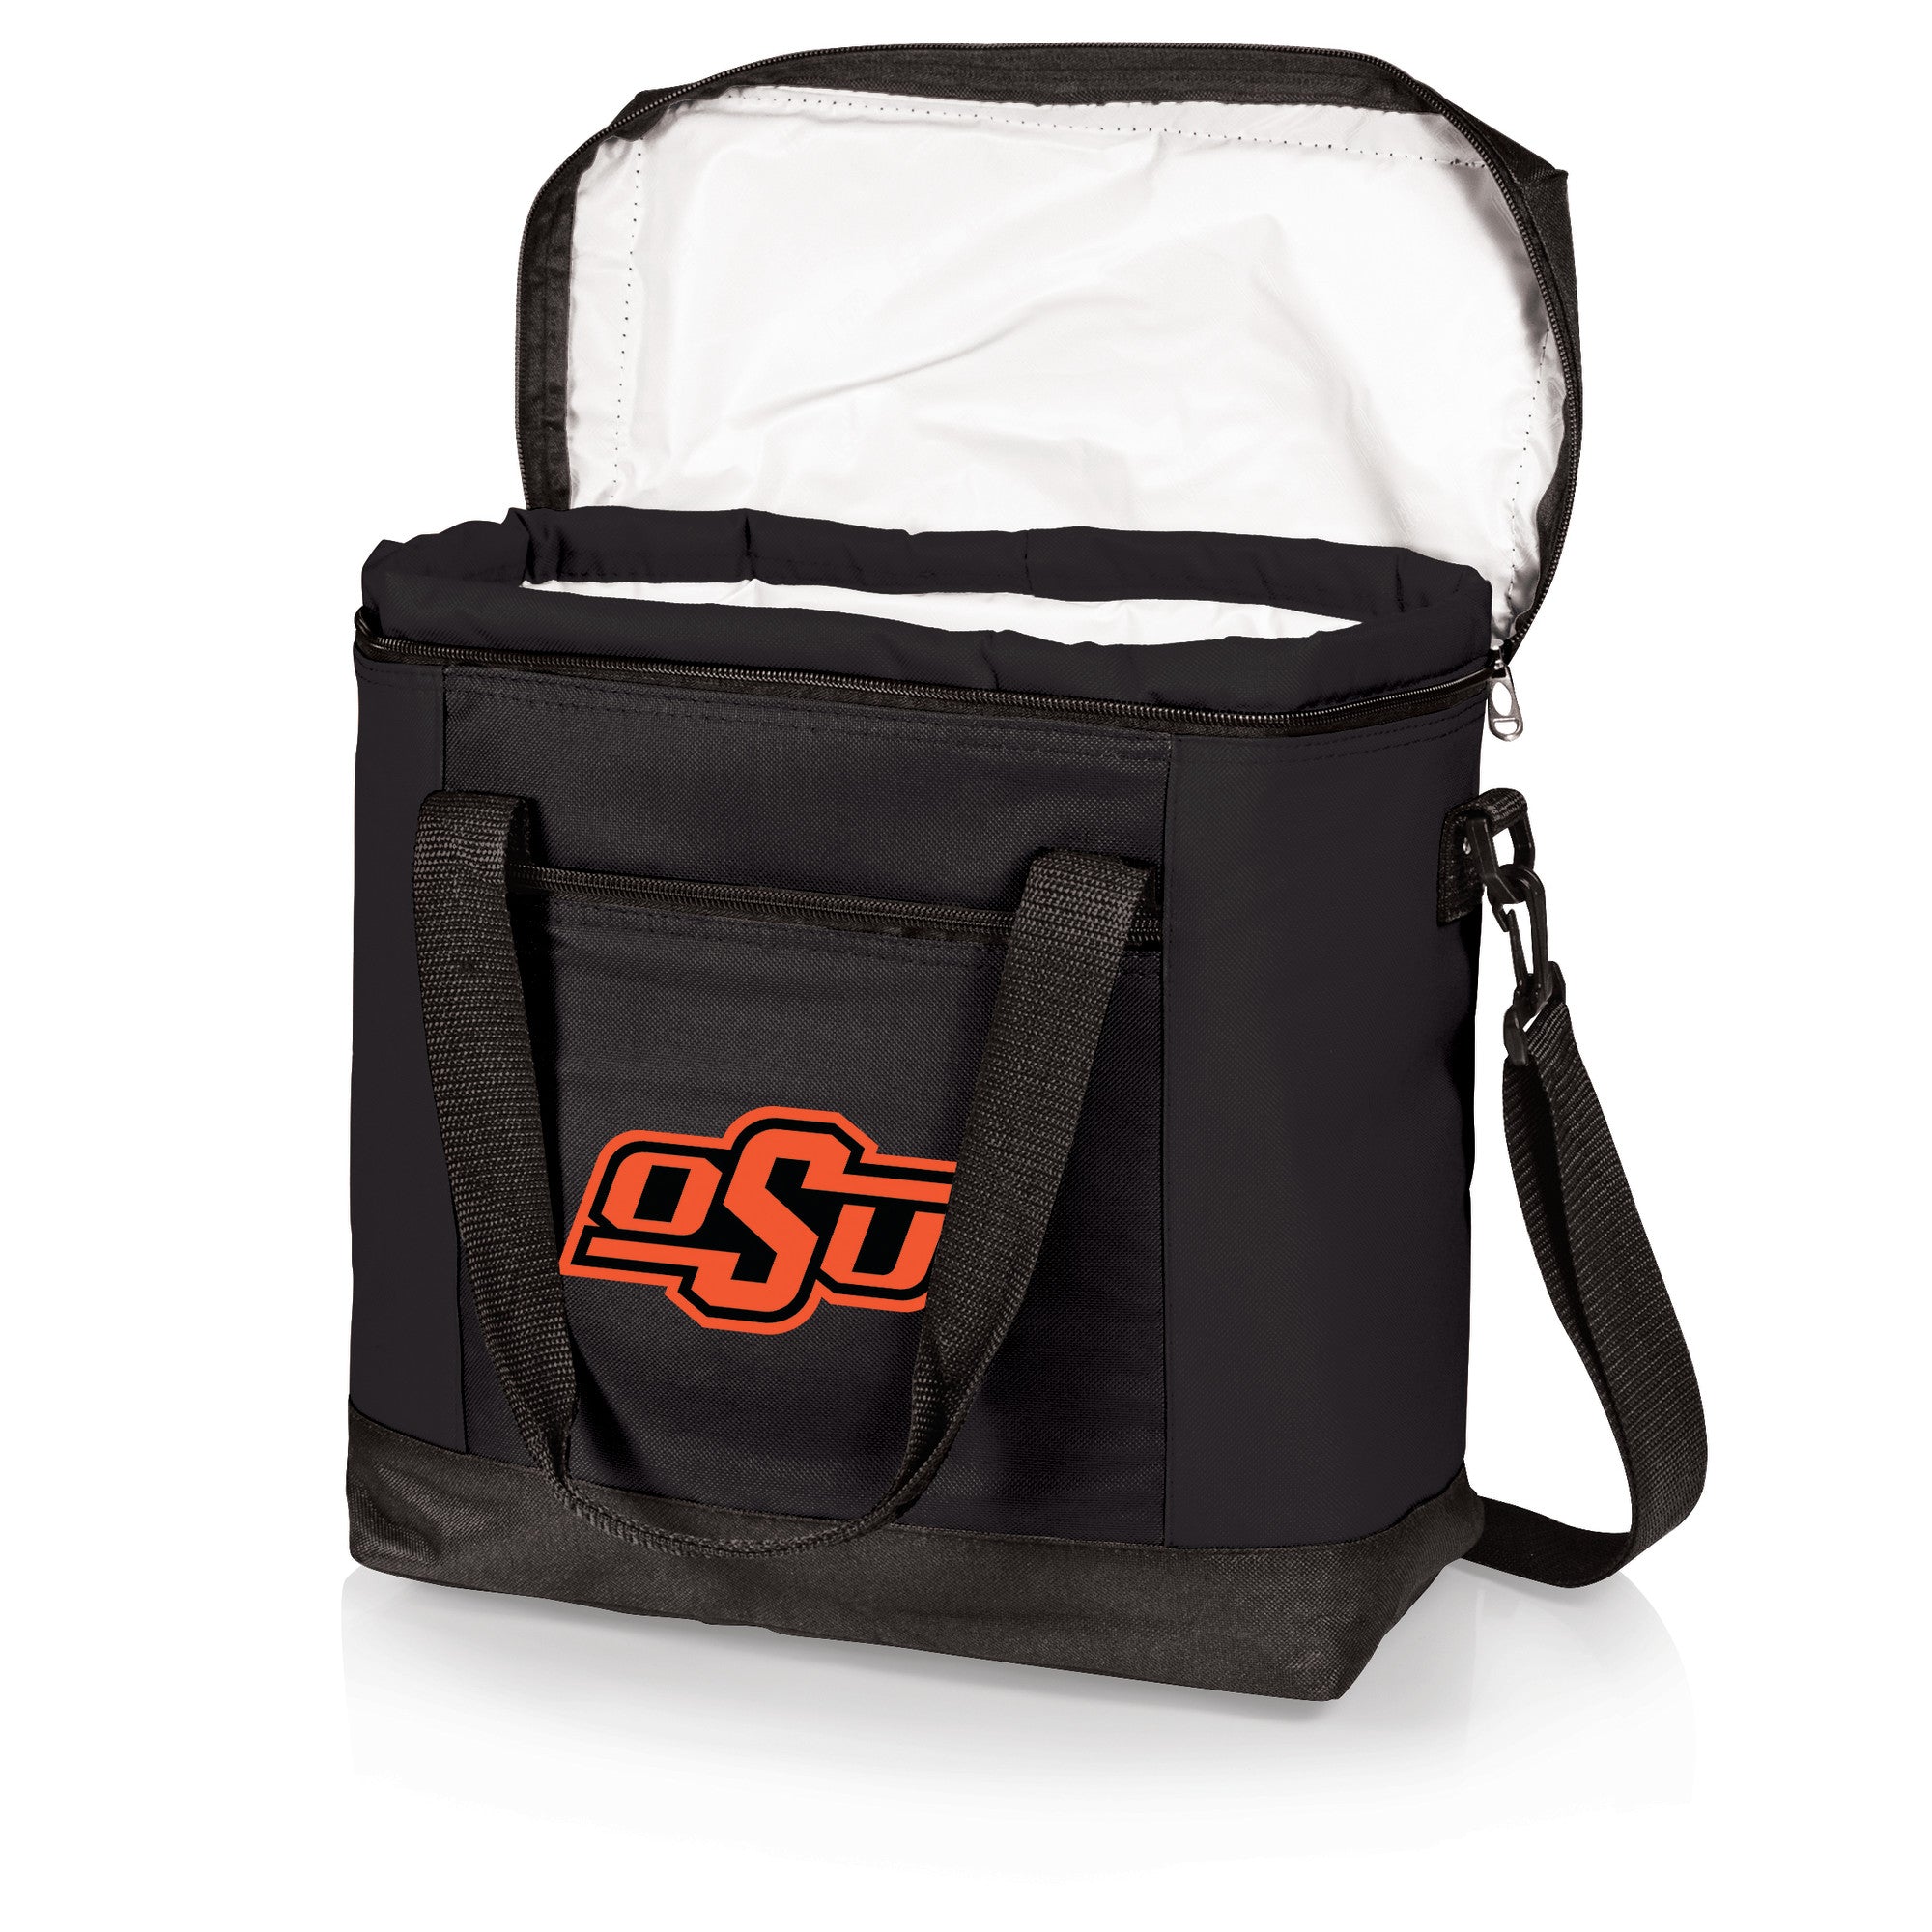 Oklahoma State Cowboys - Montero Cooler Tote Bag